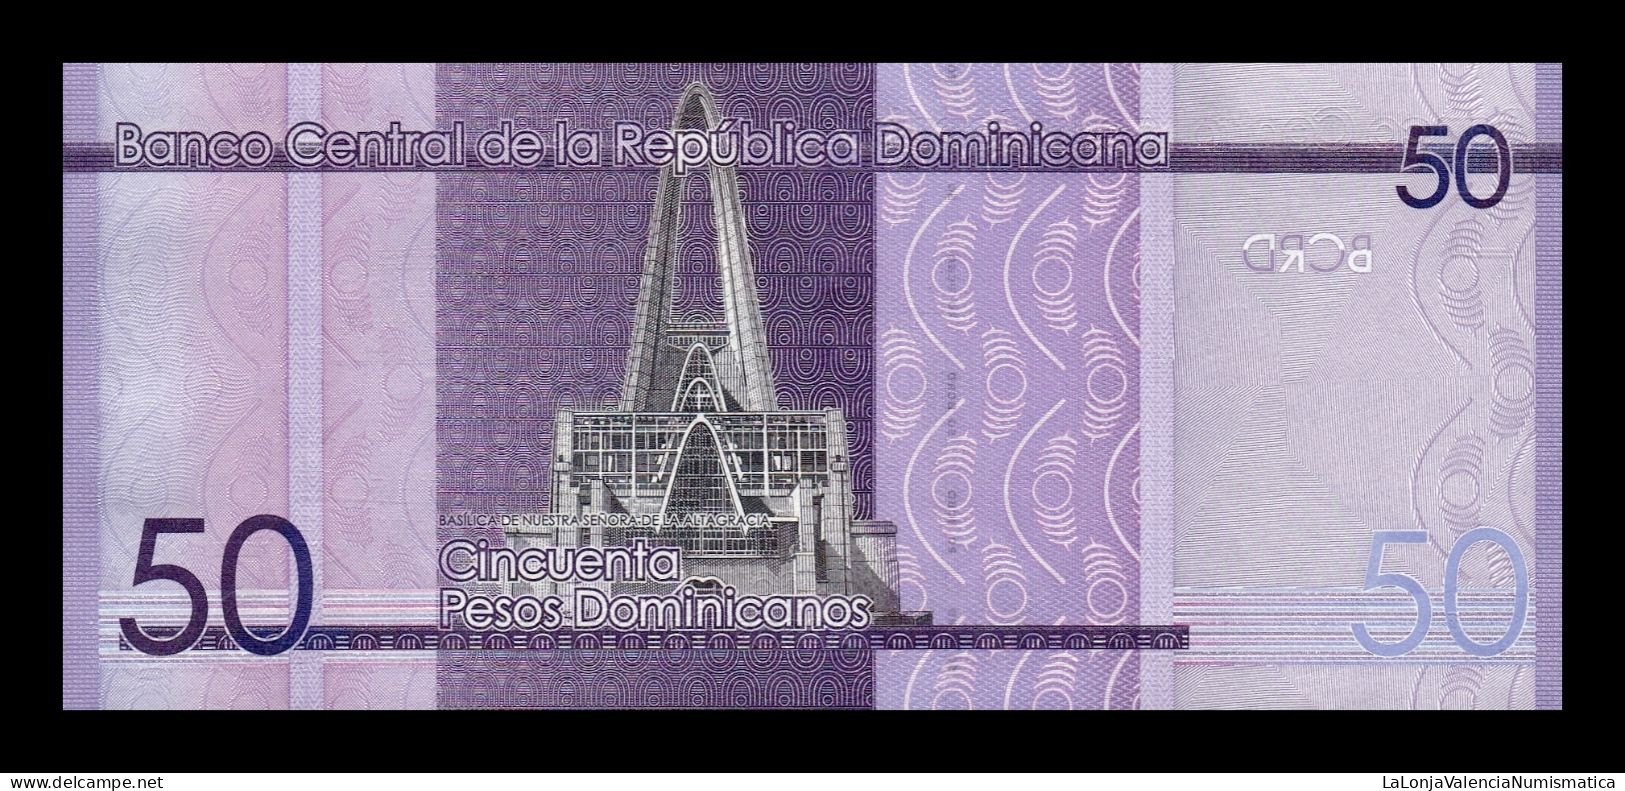 República Dominicana 50 Pesos Dominicanos 2016 Pick 189c Low Serial 146 Sc Unc - Dominicaine